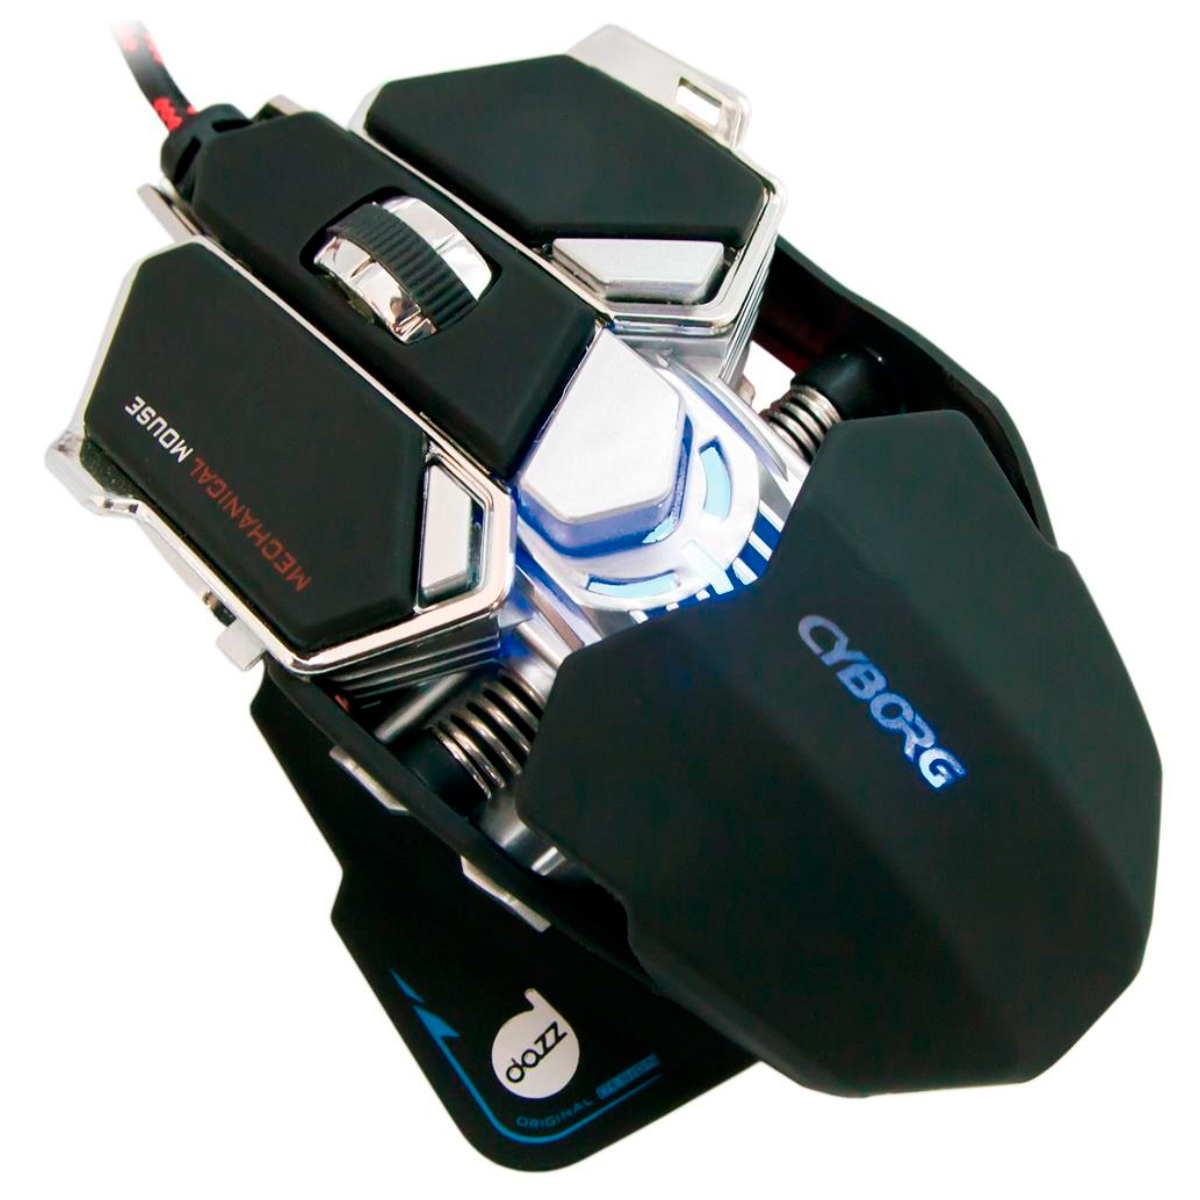 Mouse Gamer Dazz Cyborg - 4000dpi - 9 botões - USB - 622462